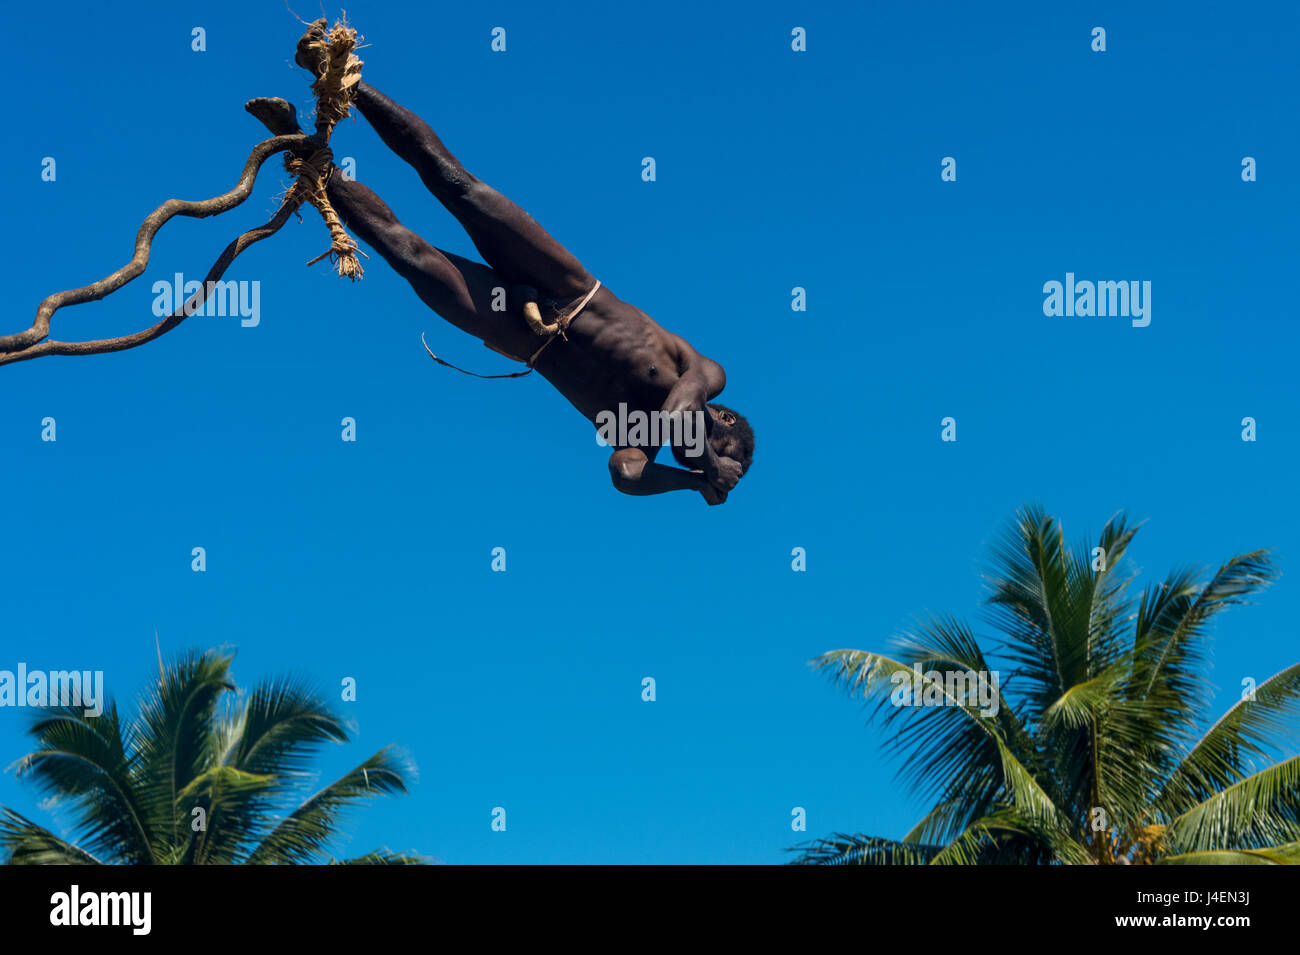 Uomo che salta da una torre di bambù, Pentecoste terra immersioni subacquee, Pentecoste, Vanuatu, Pacific Foto Stock